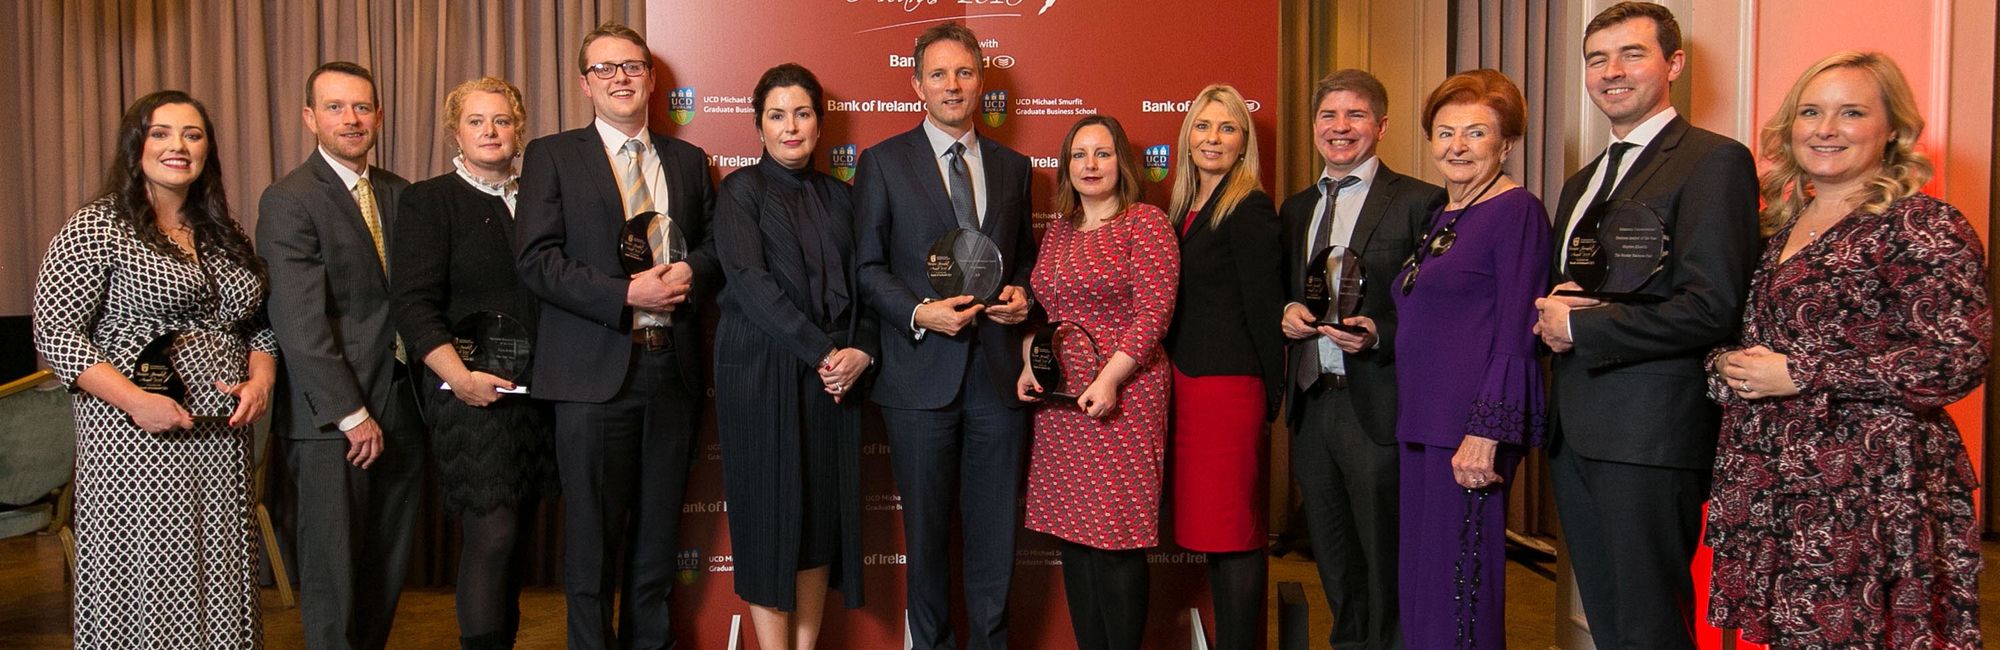 Smurfit Business Journalist Awards Winners 2018